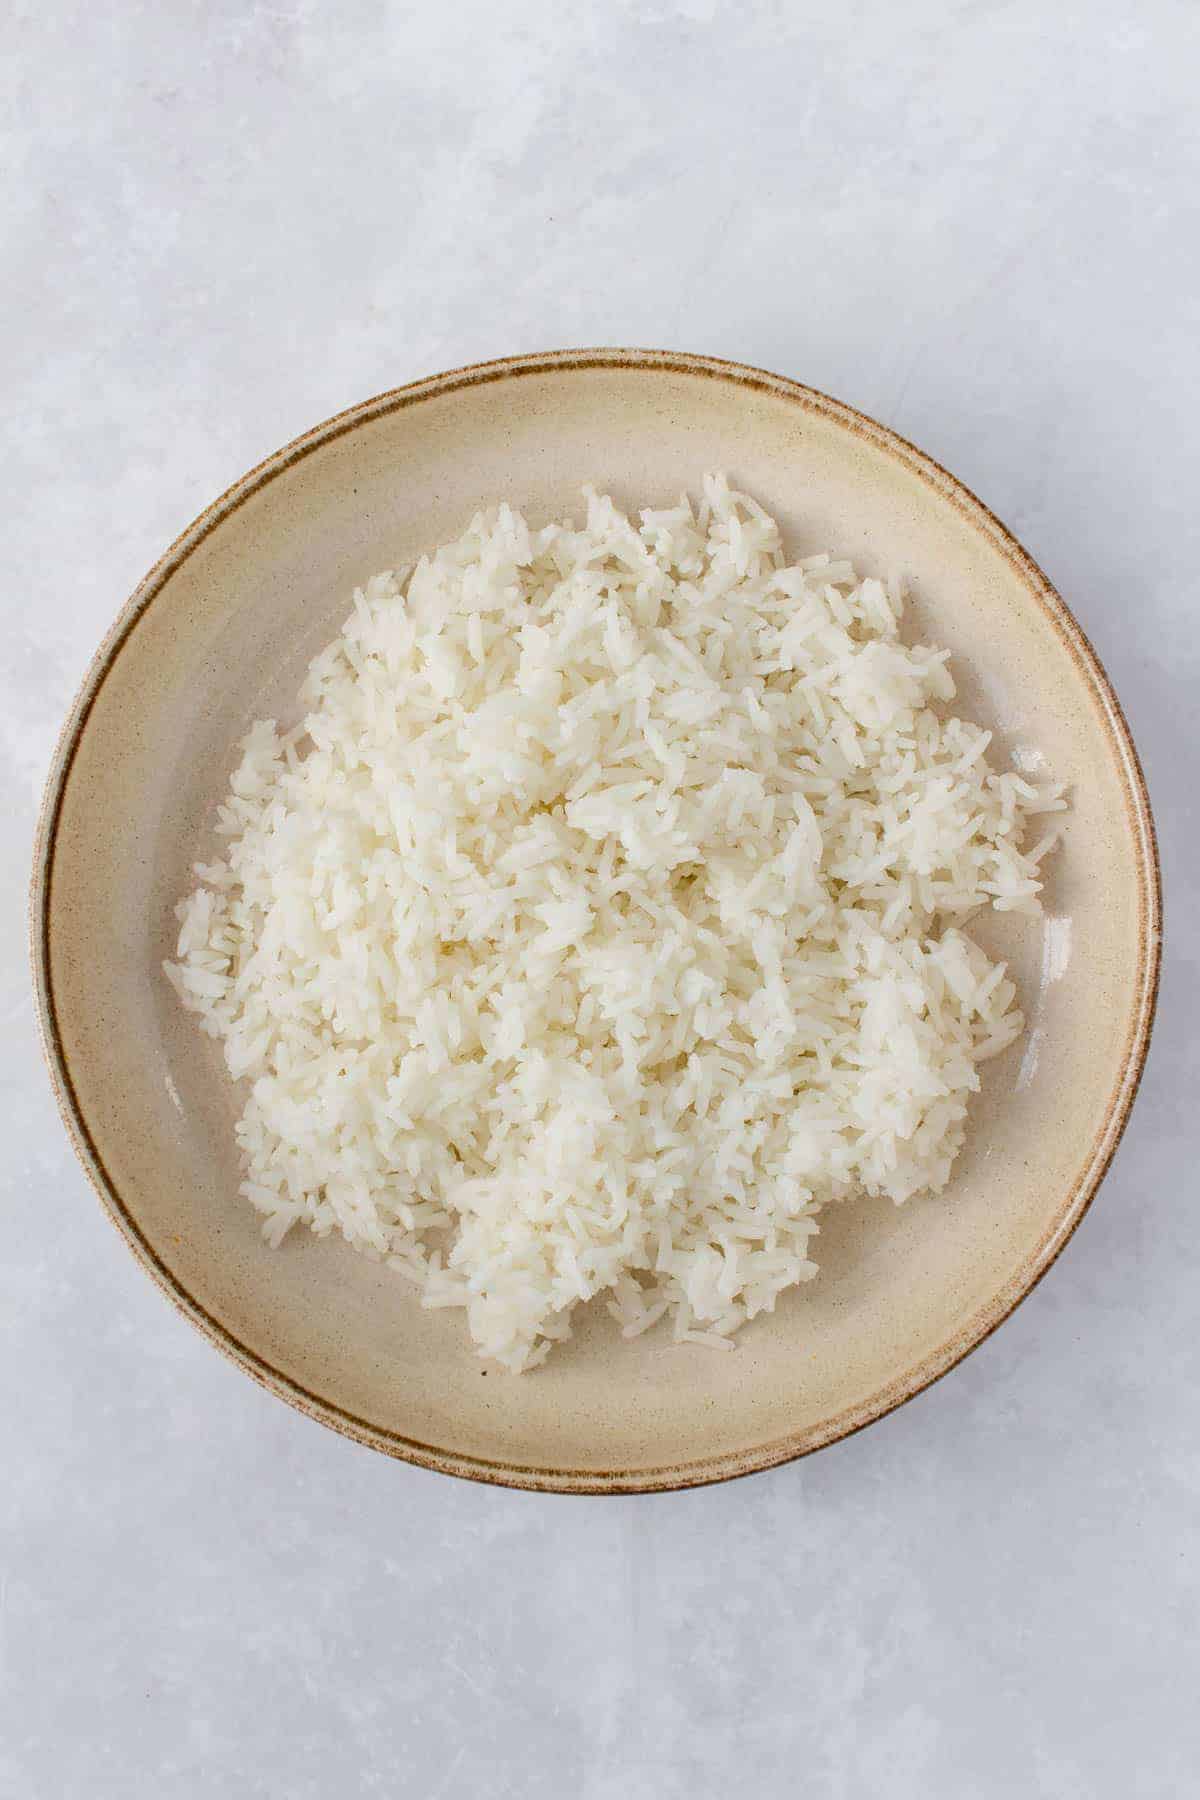 A plate of jasmine rice.